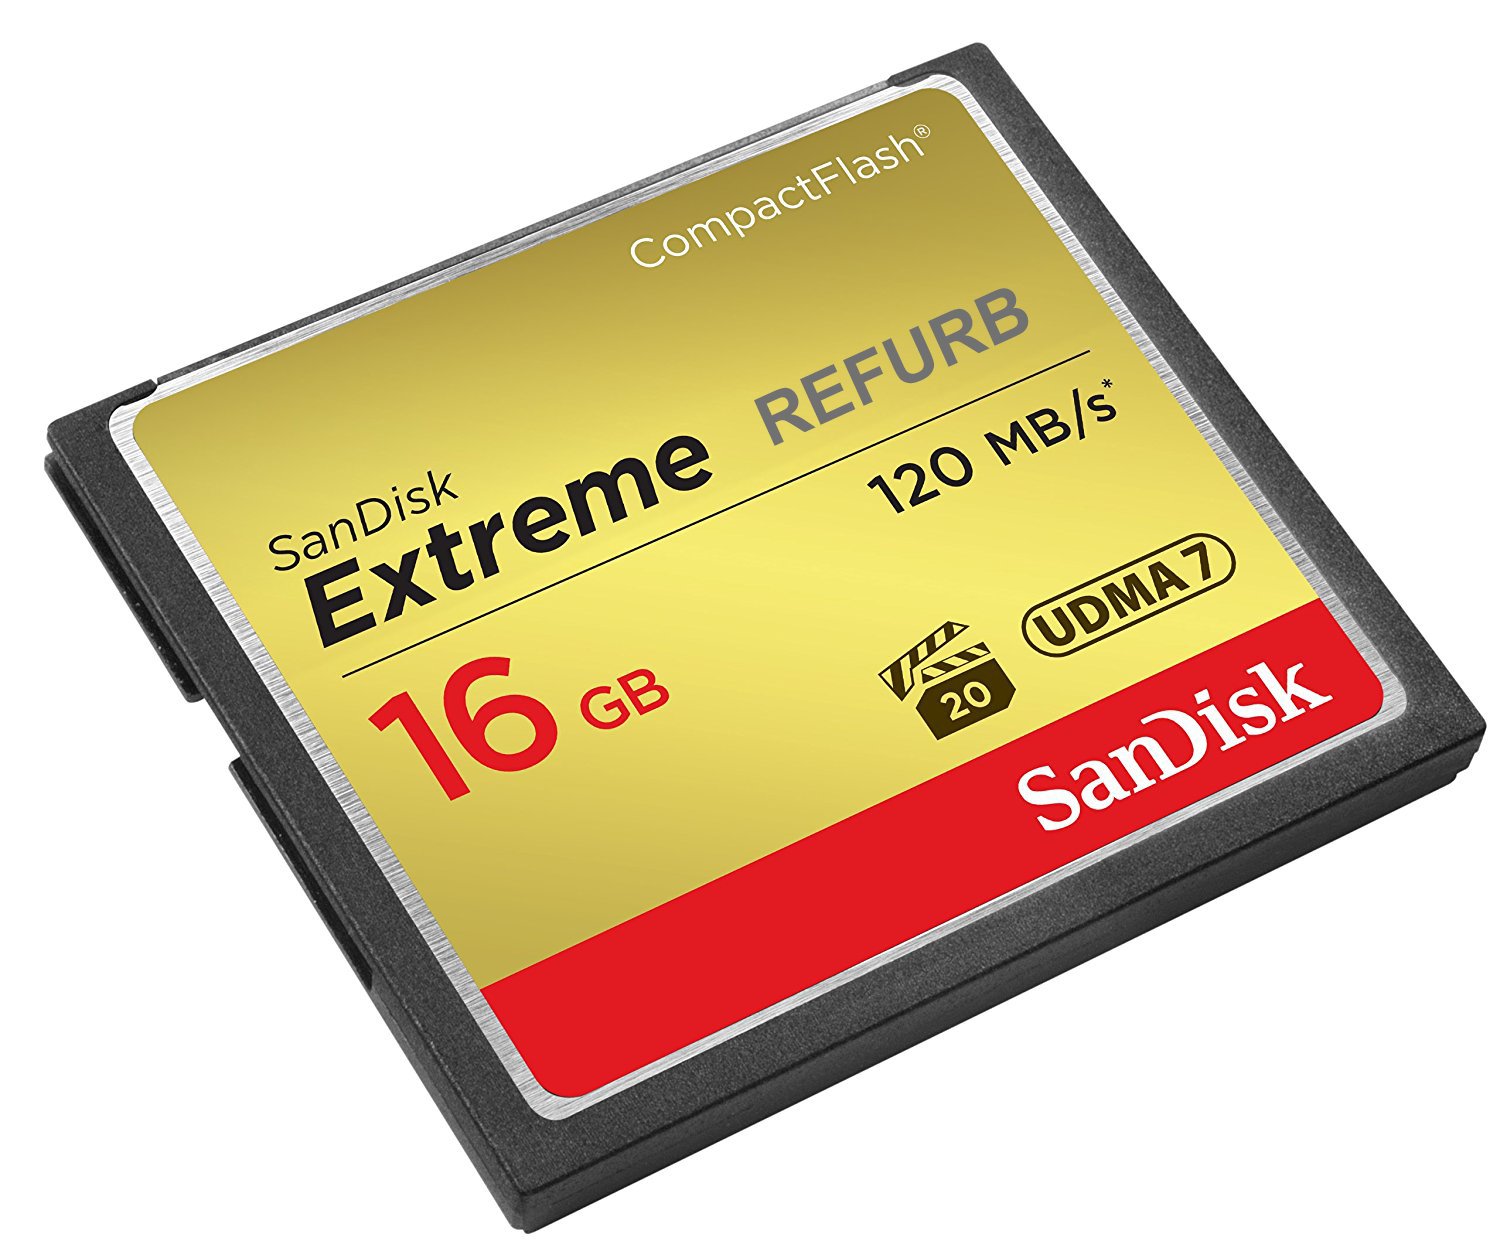 SanDisk Extreme 16GB CompactFlash Memory Card UDMA 7 120MB/s-SDCFXS-016G-X46 (Certified Refurbished)